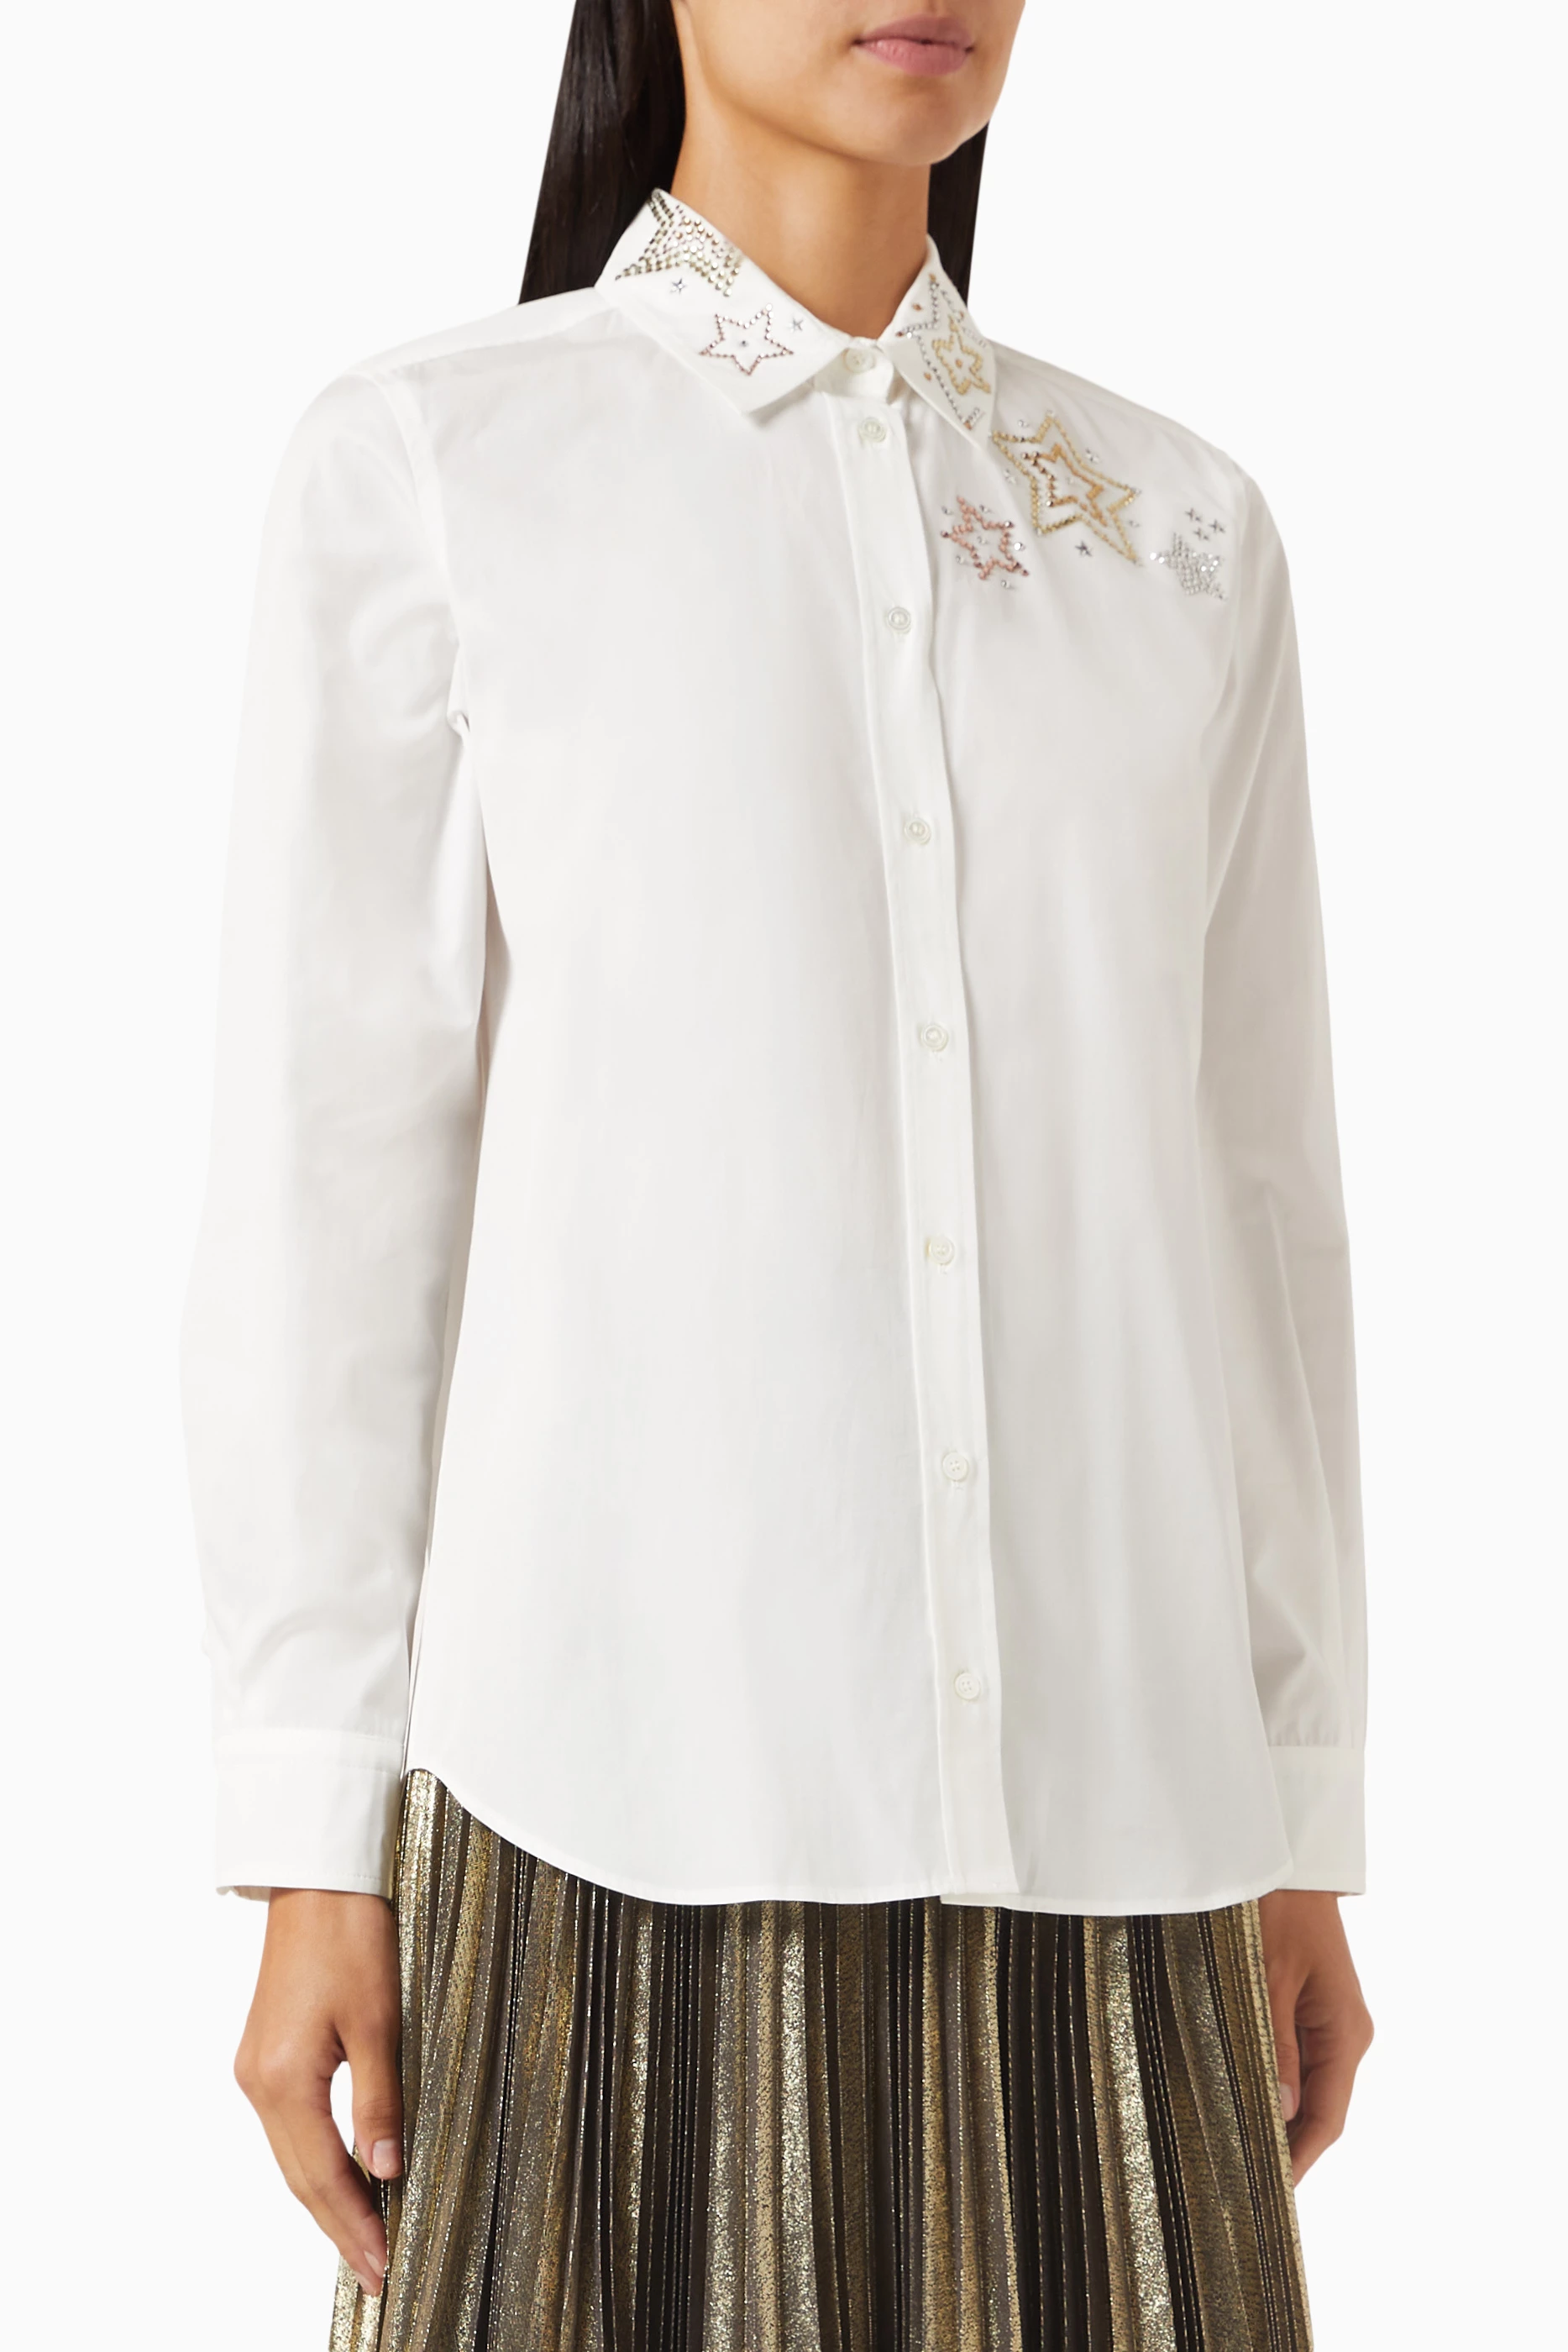 Buy No Nasties Coconut Milk Side Slit White Cotton Summer Shirt For Women  Online